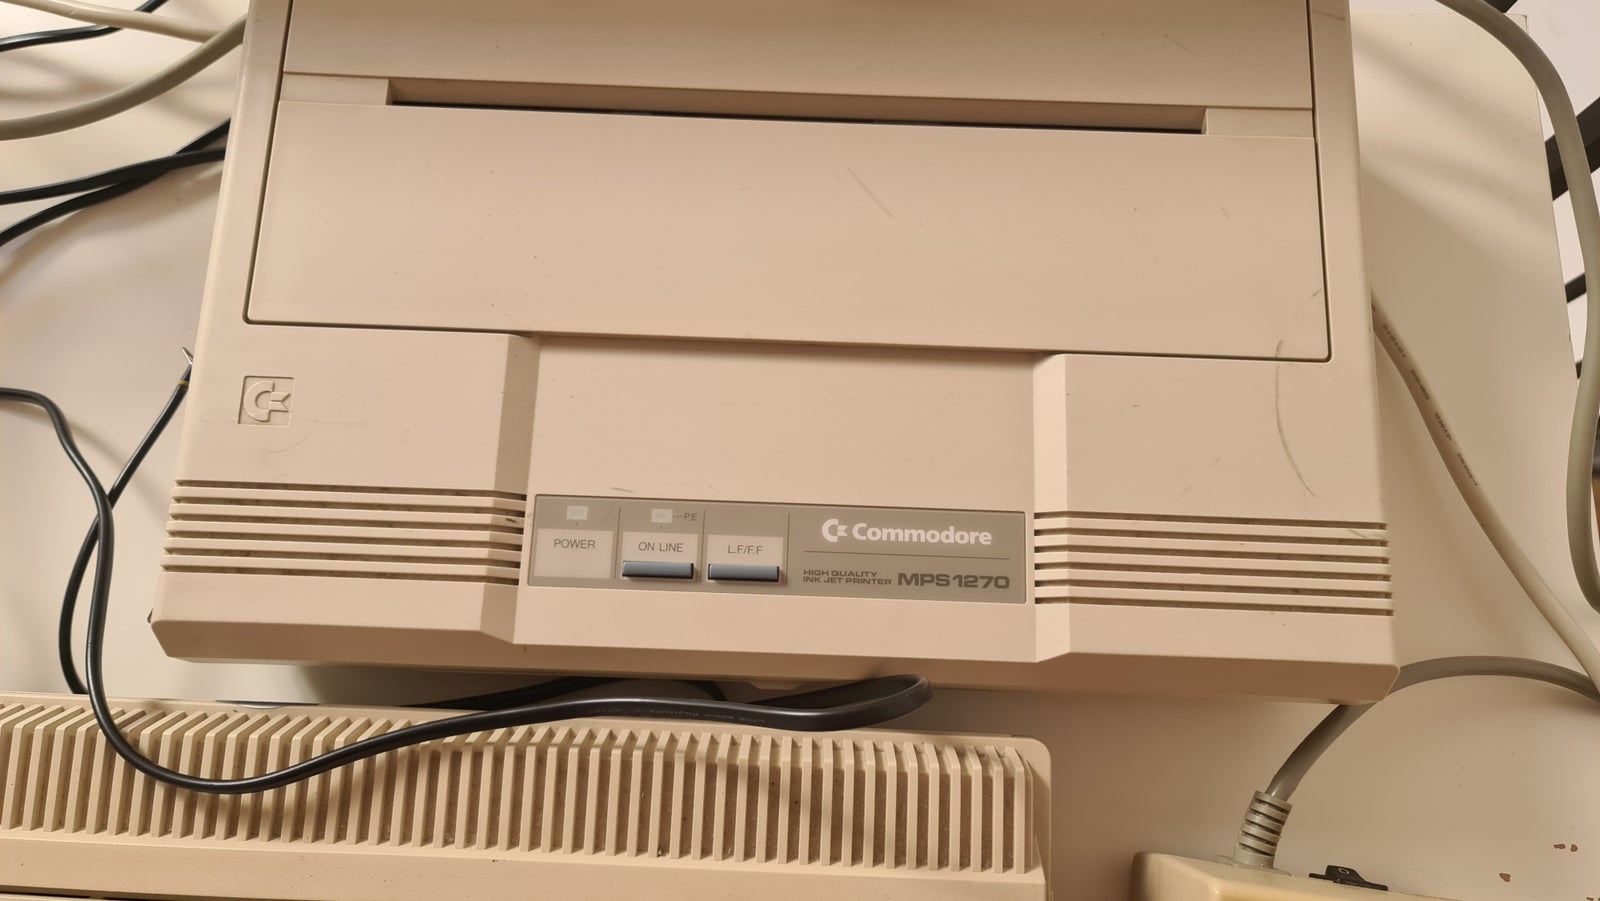 Amiga 500 med Philips CM11342 monitor, spillekonsol, God